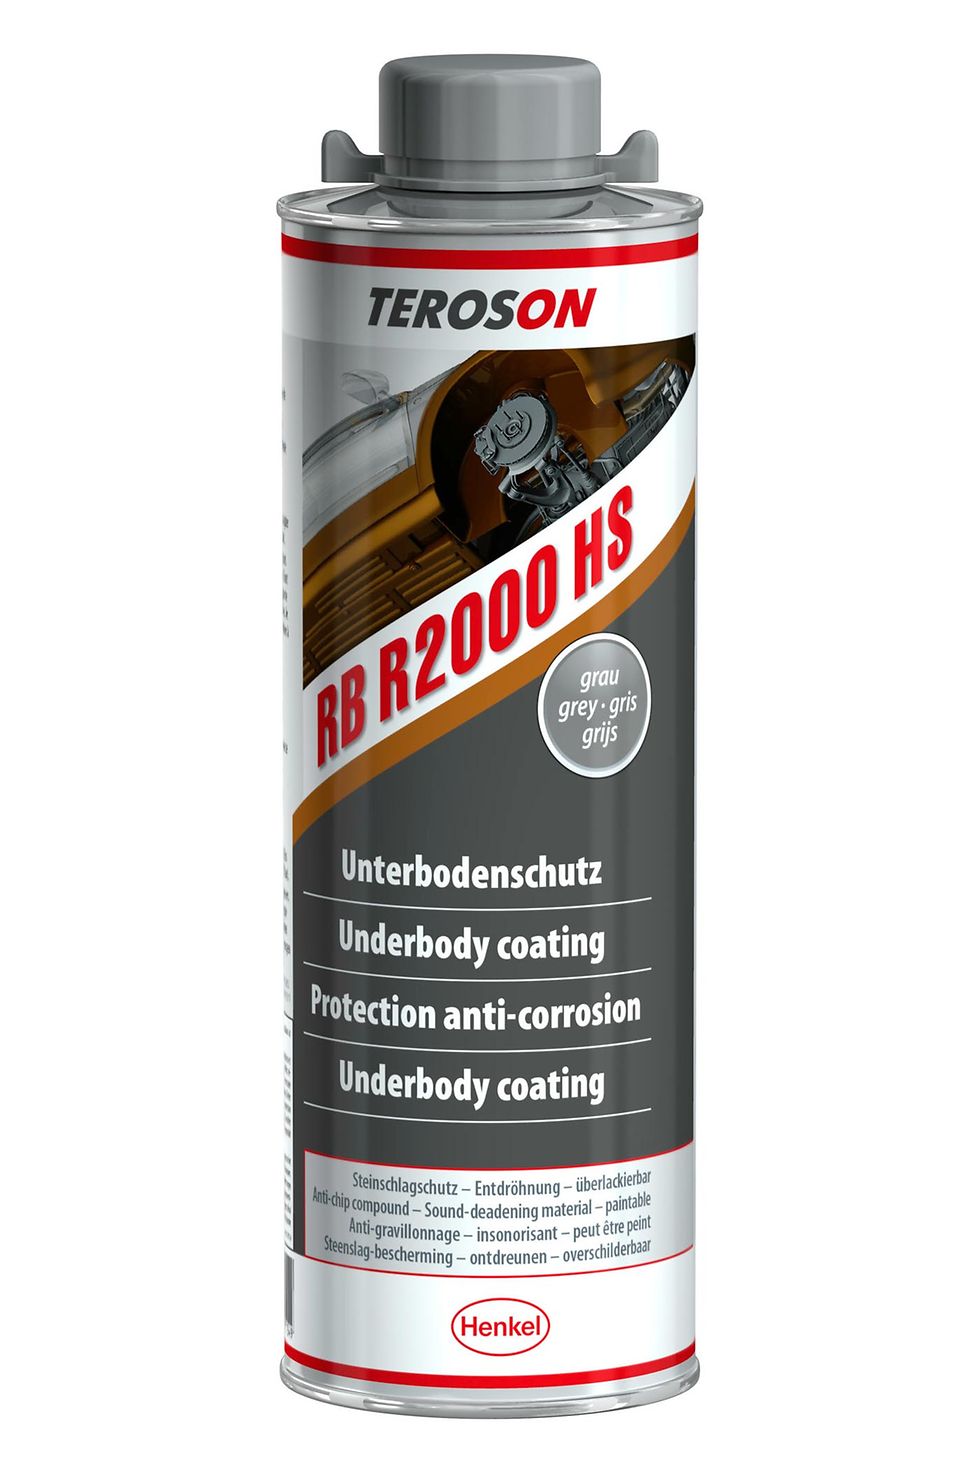 Teroson RB R2000 HS